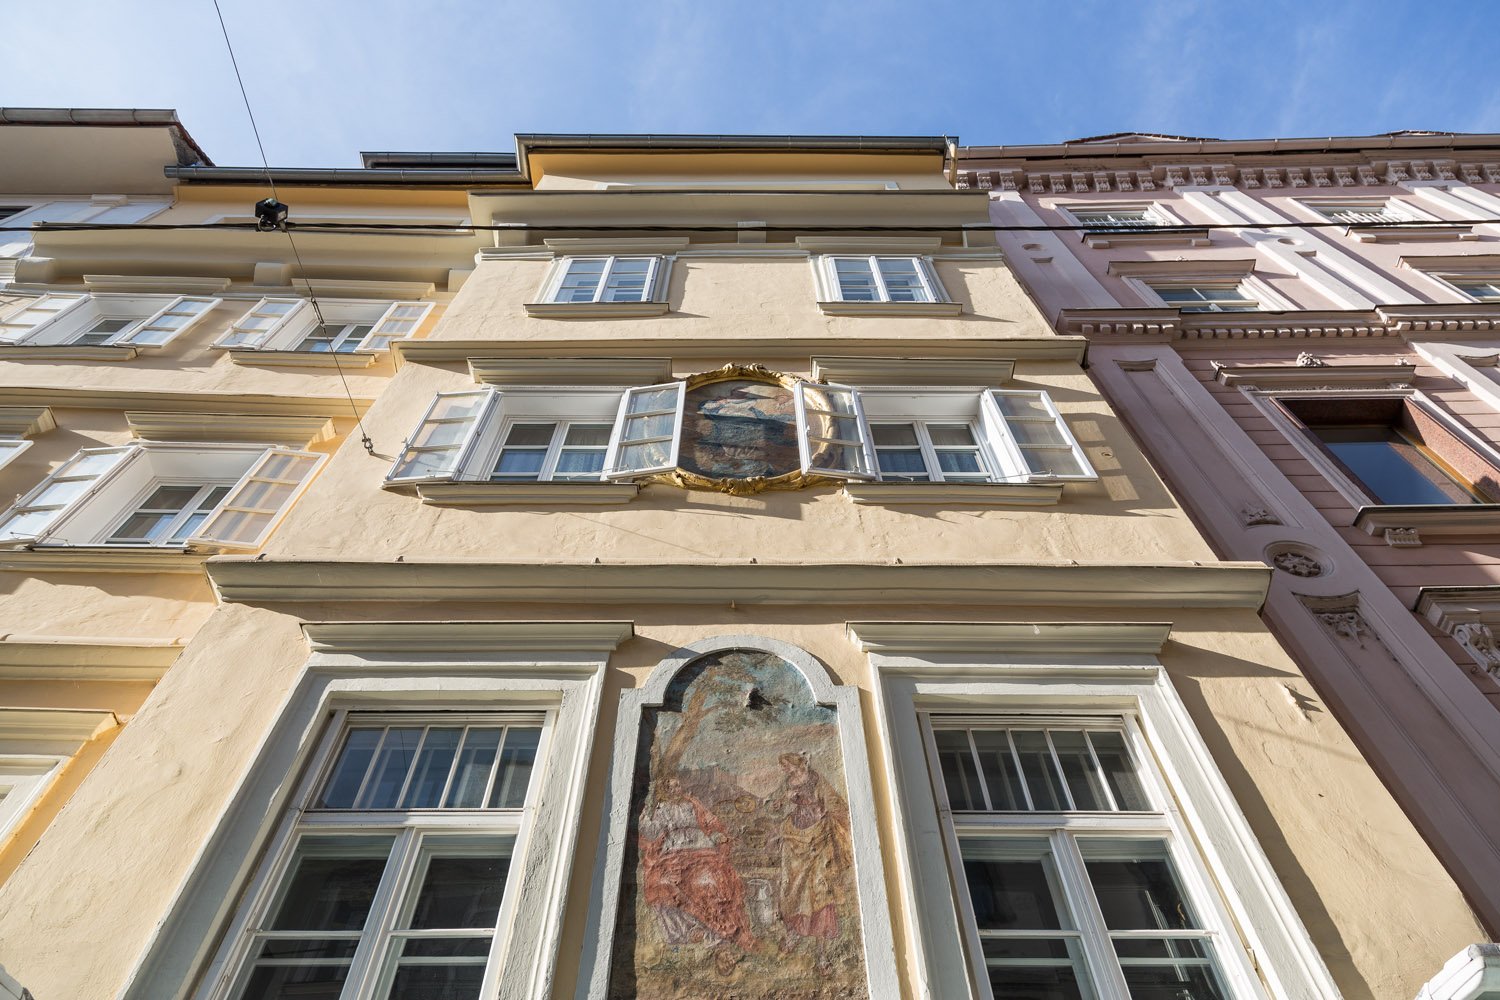 Bürofläche zur Miete Provisionsfrei 10,20 € 206 m² Bürofläche Schmiedgasse 14 Innere Stadt Graz(Stadt) 8010